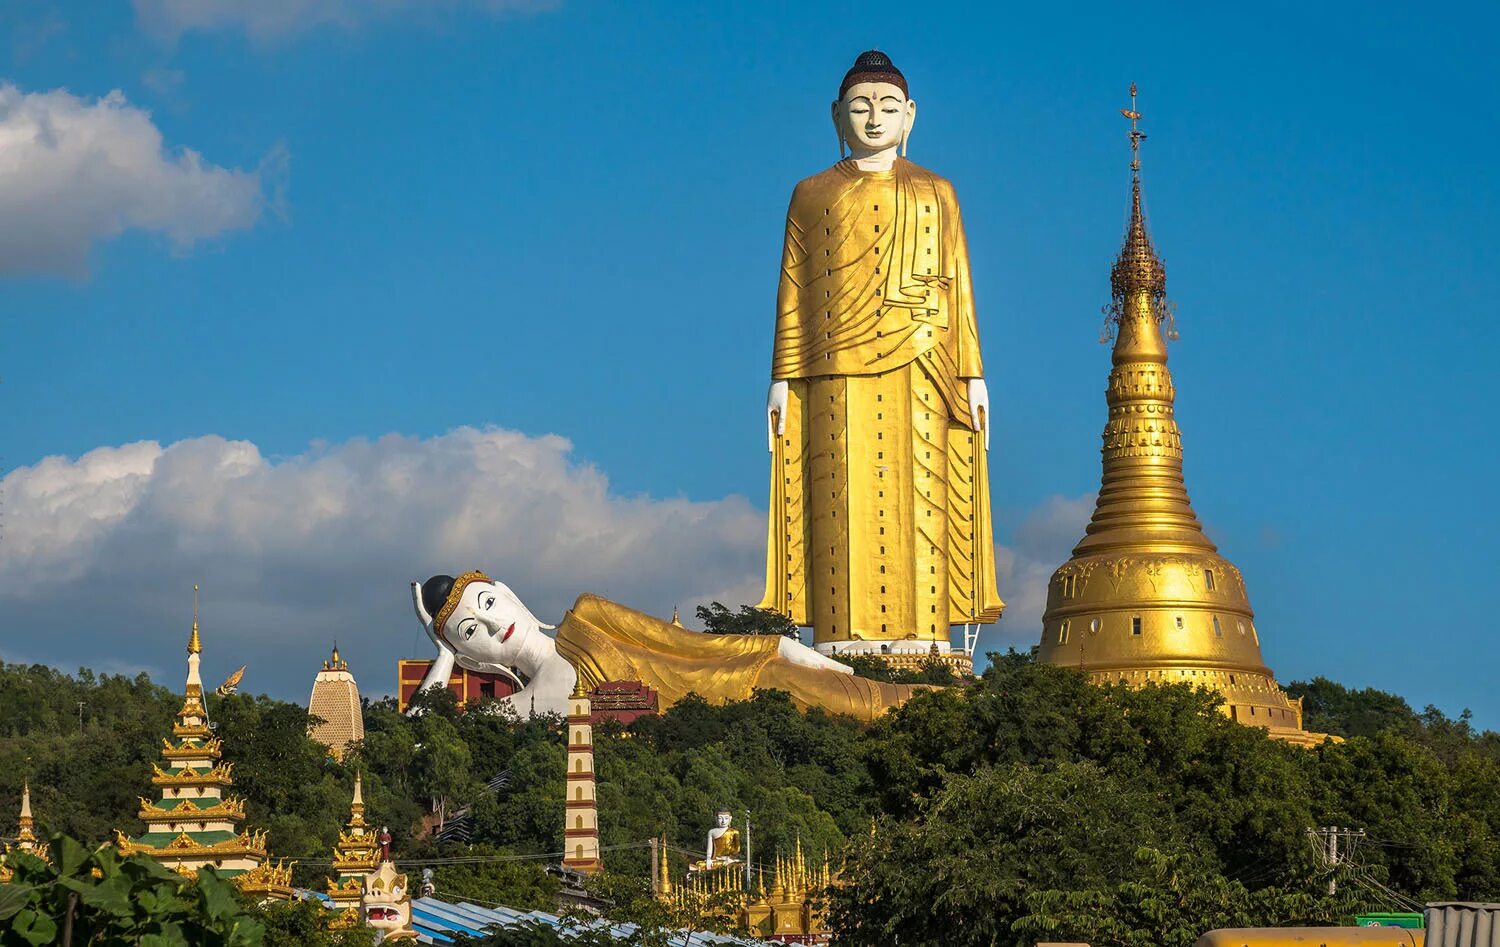 Самый большой памятник. Laykyun Setkyar, Мьянма 116 метров. Лечжун-Сасачжа Мьянма. Статуя Будды Шакьямуни в Мьянме. Лечжун-Сасачжа — статуя Будды Шакьямуни.